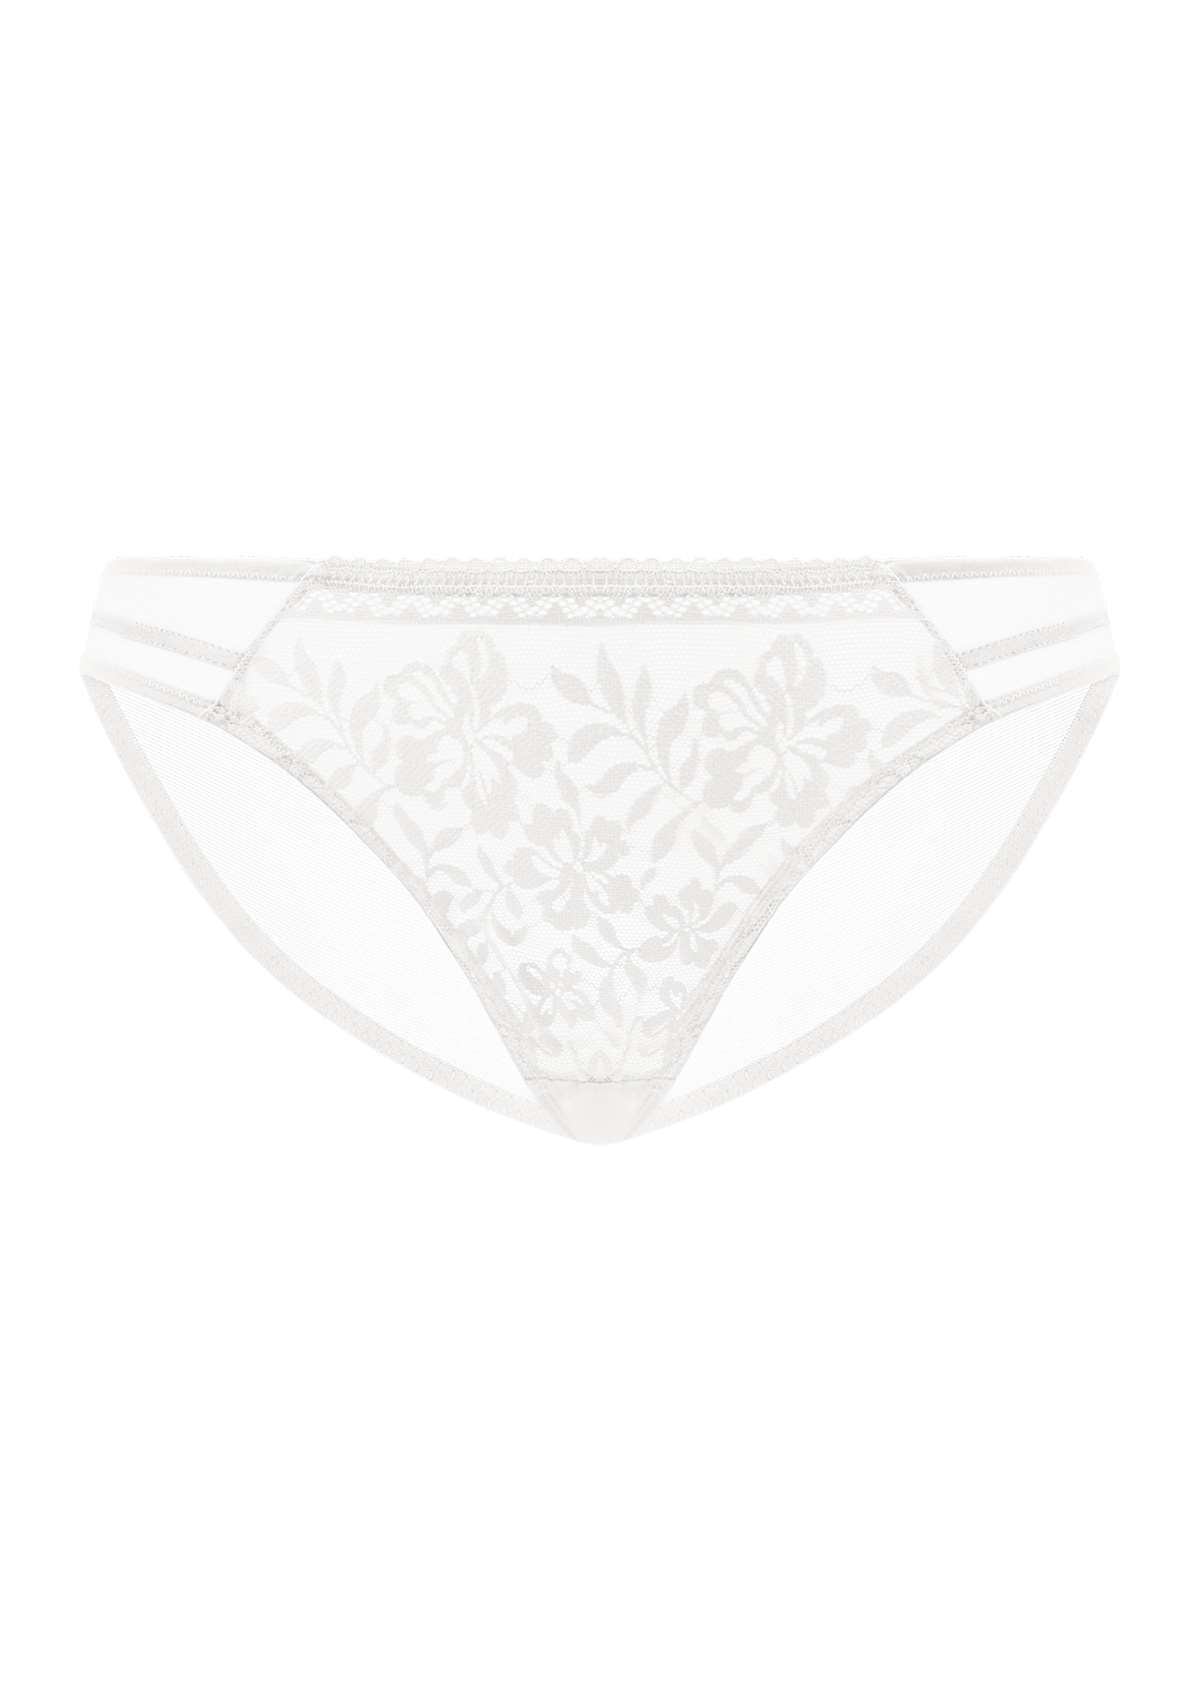 HSIA Gladioli Floral Lace Mesh Airy Elegant Beautiful Bikini Underwear - M / Peach